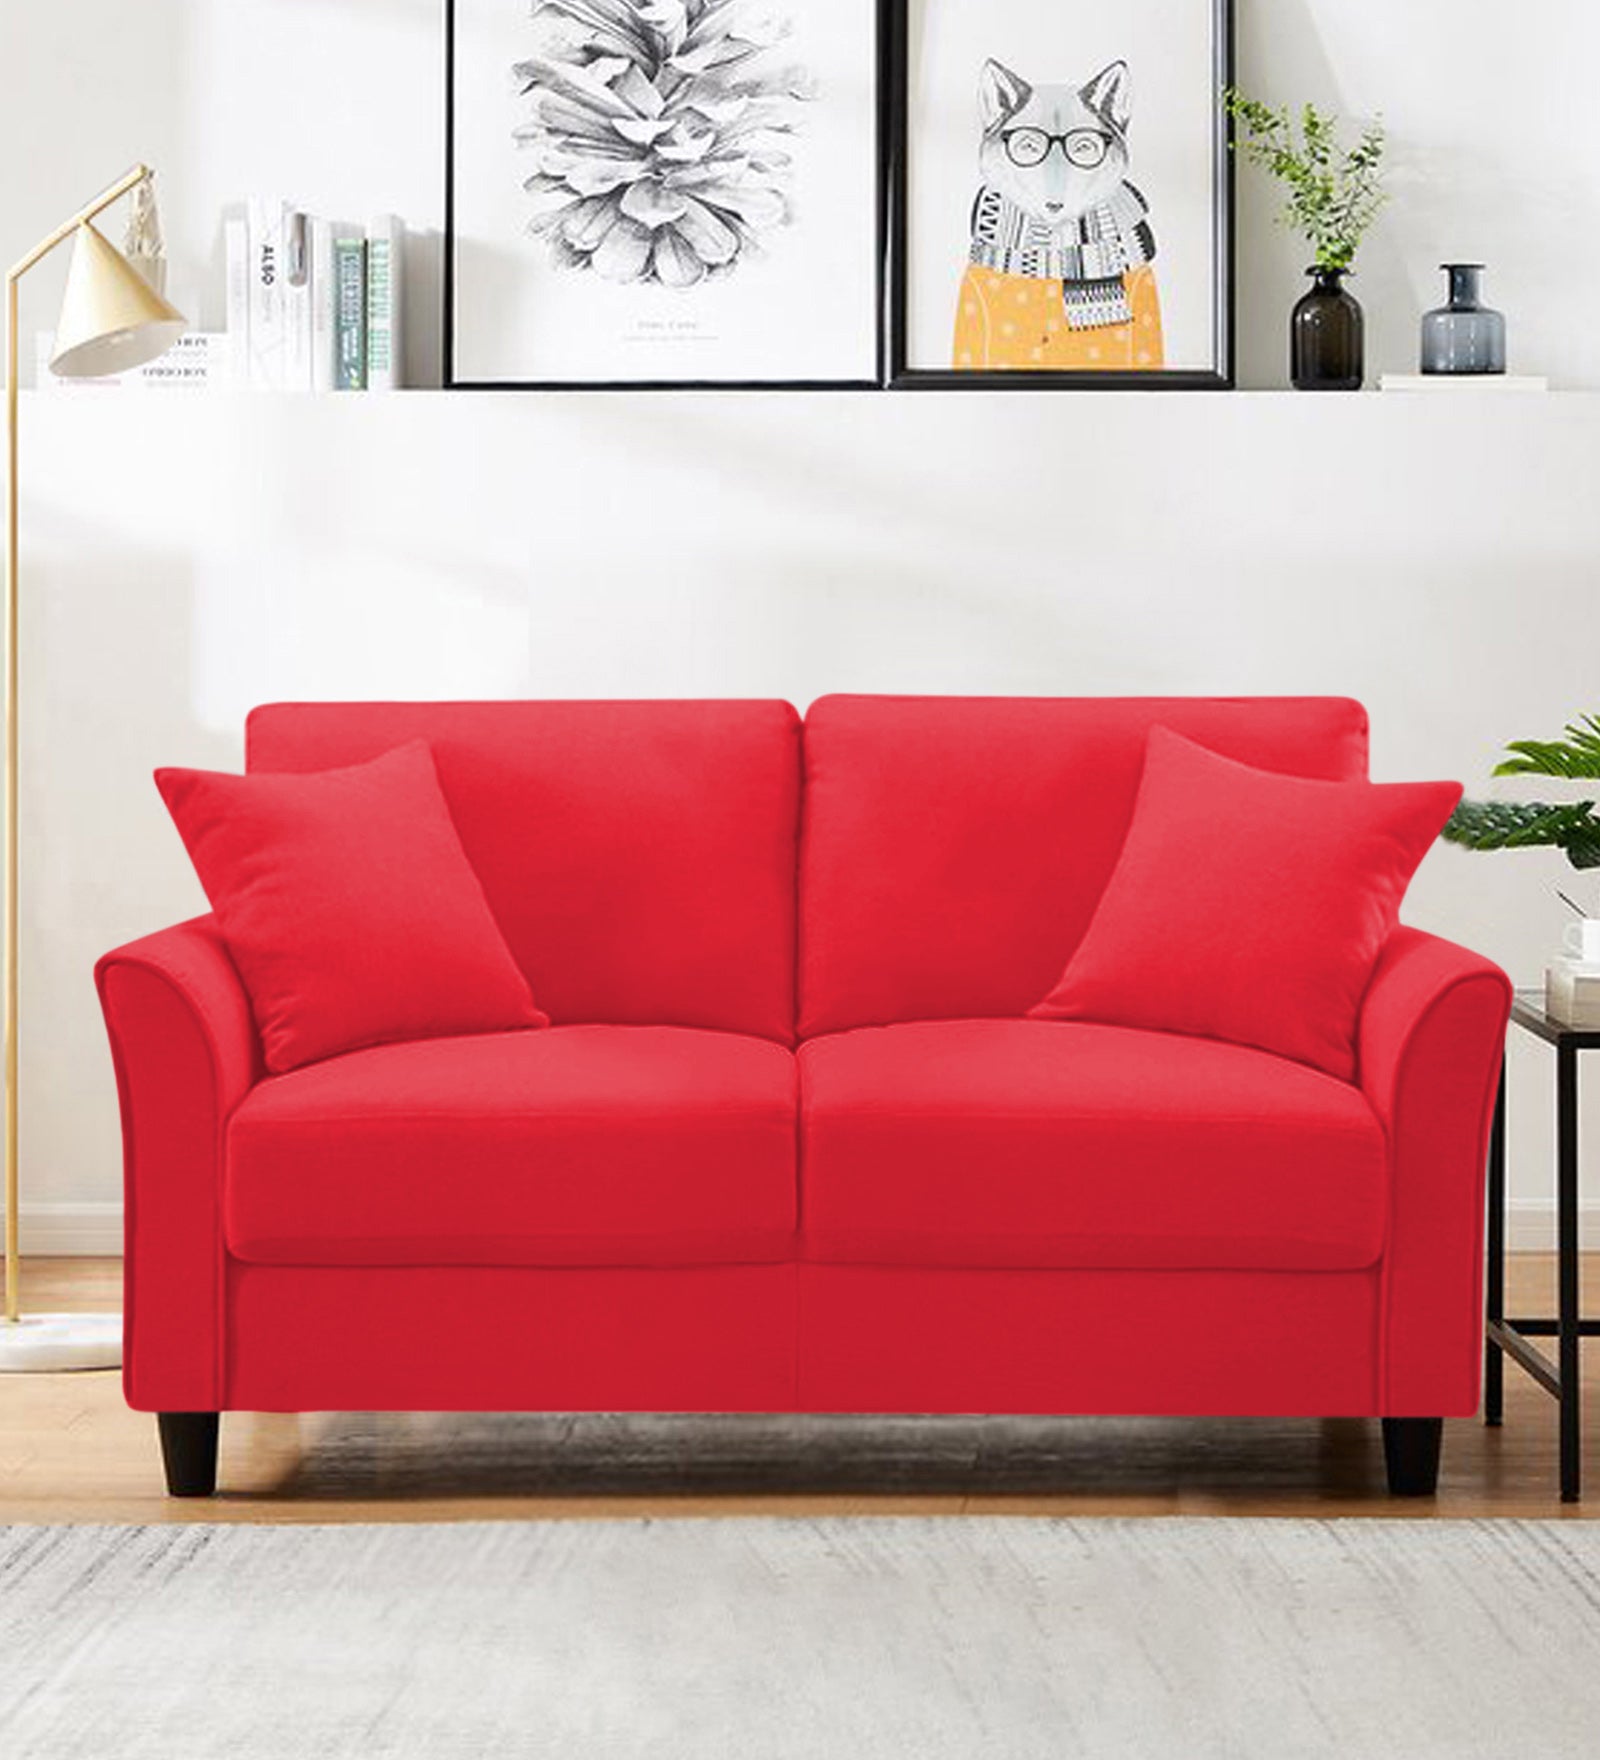 Daroo Velvet 2 Seater Sofa In Ox Blood Maroon Colour